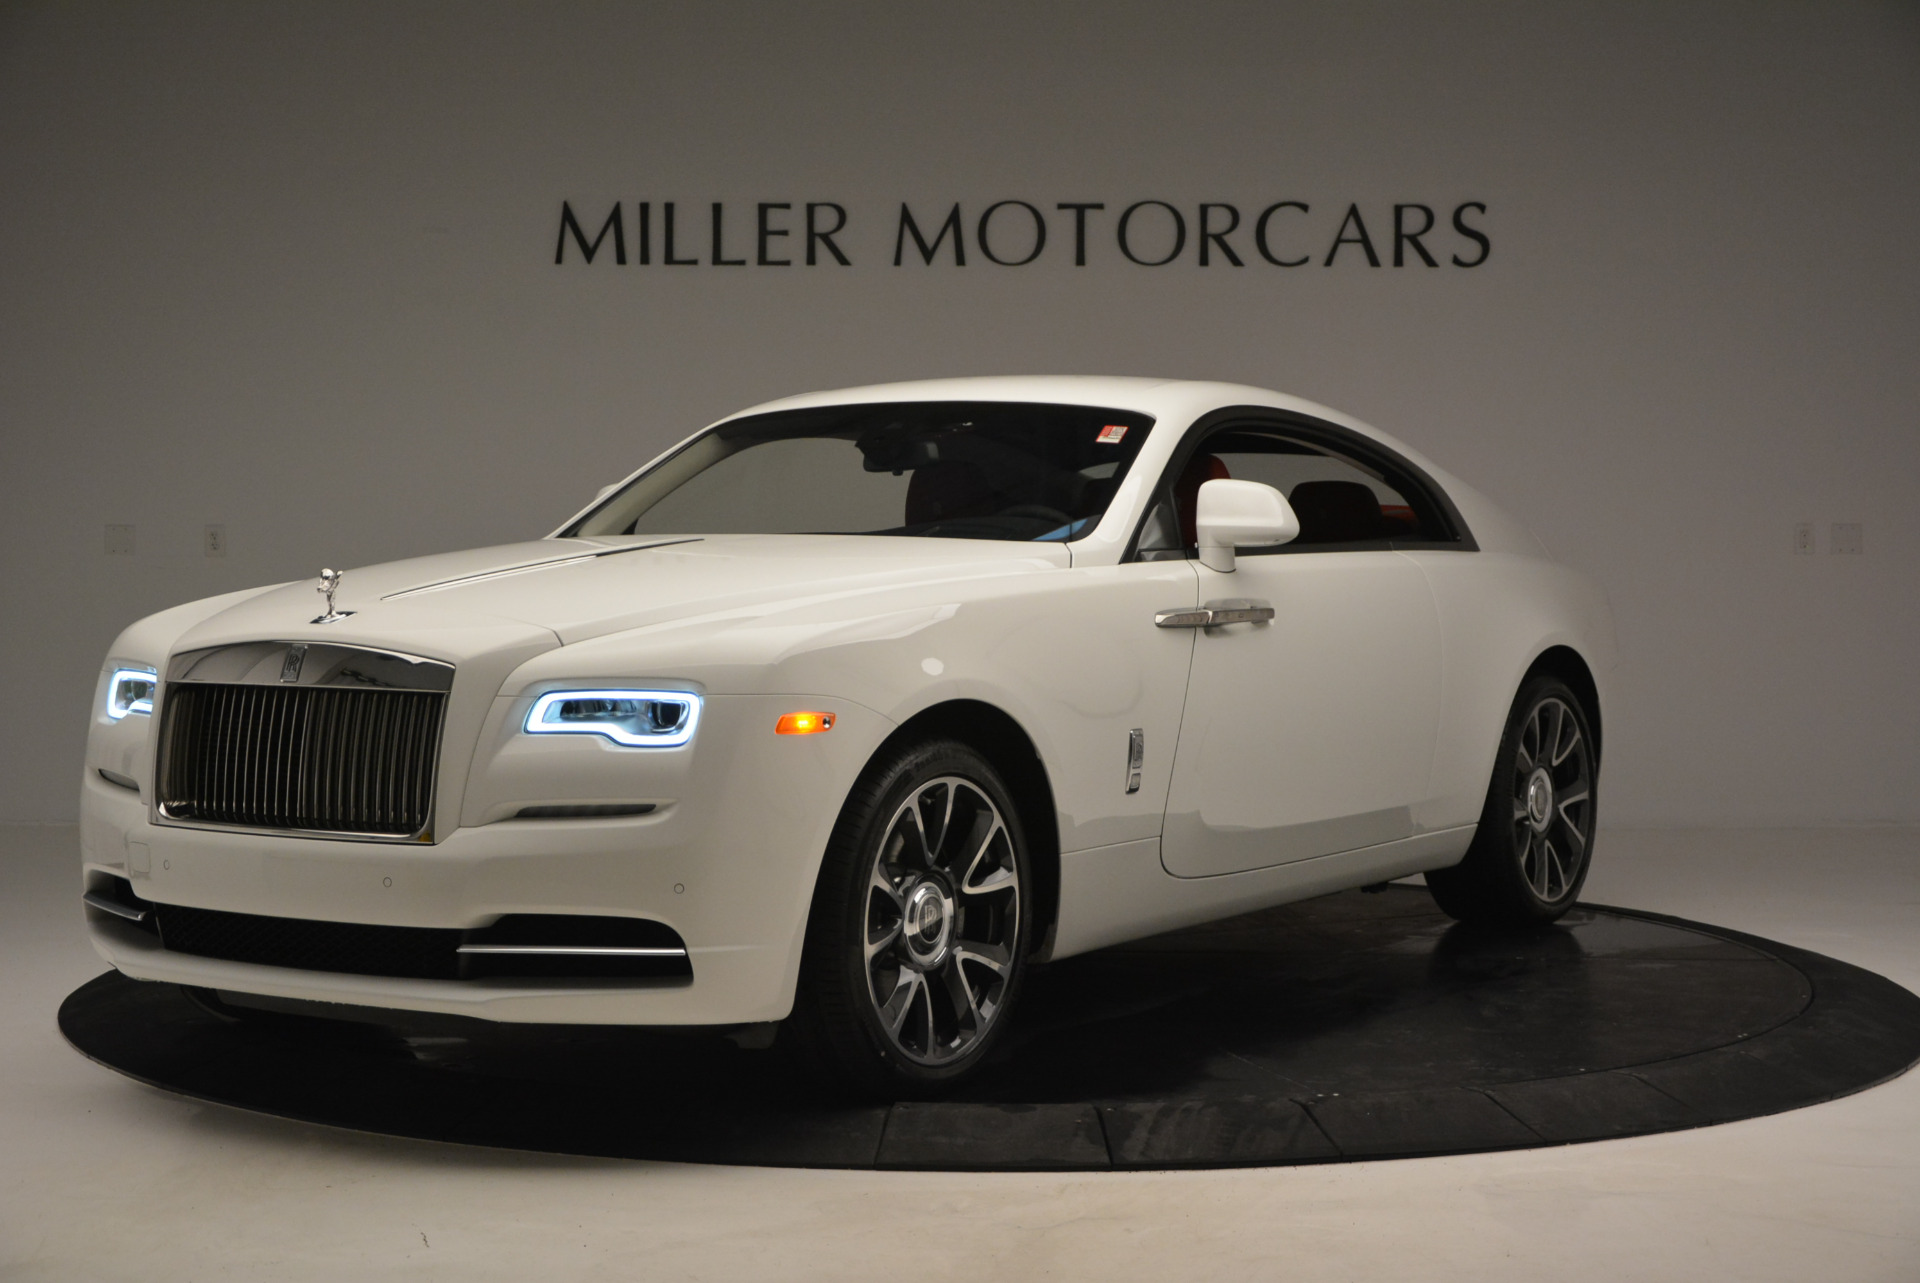 New 2017 Rolls Royce Wraith For Sale Miller Motorcars